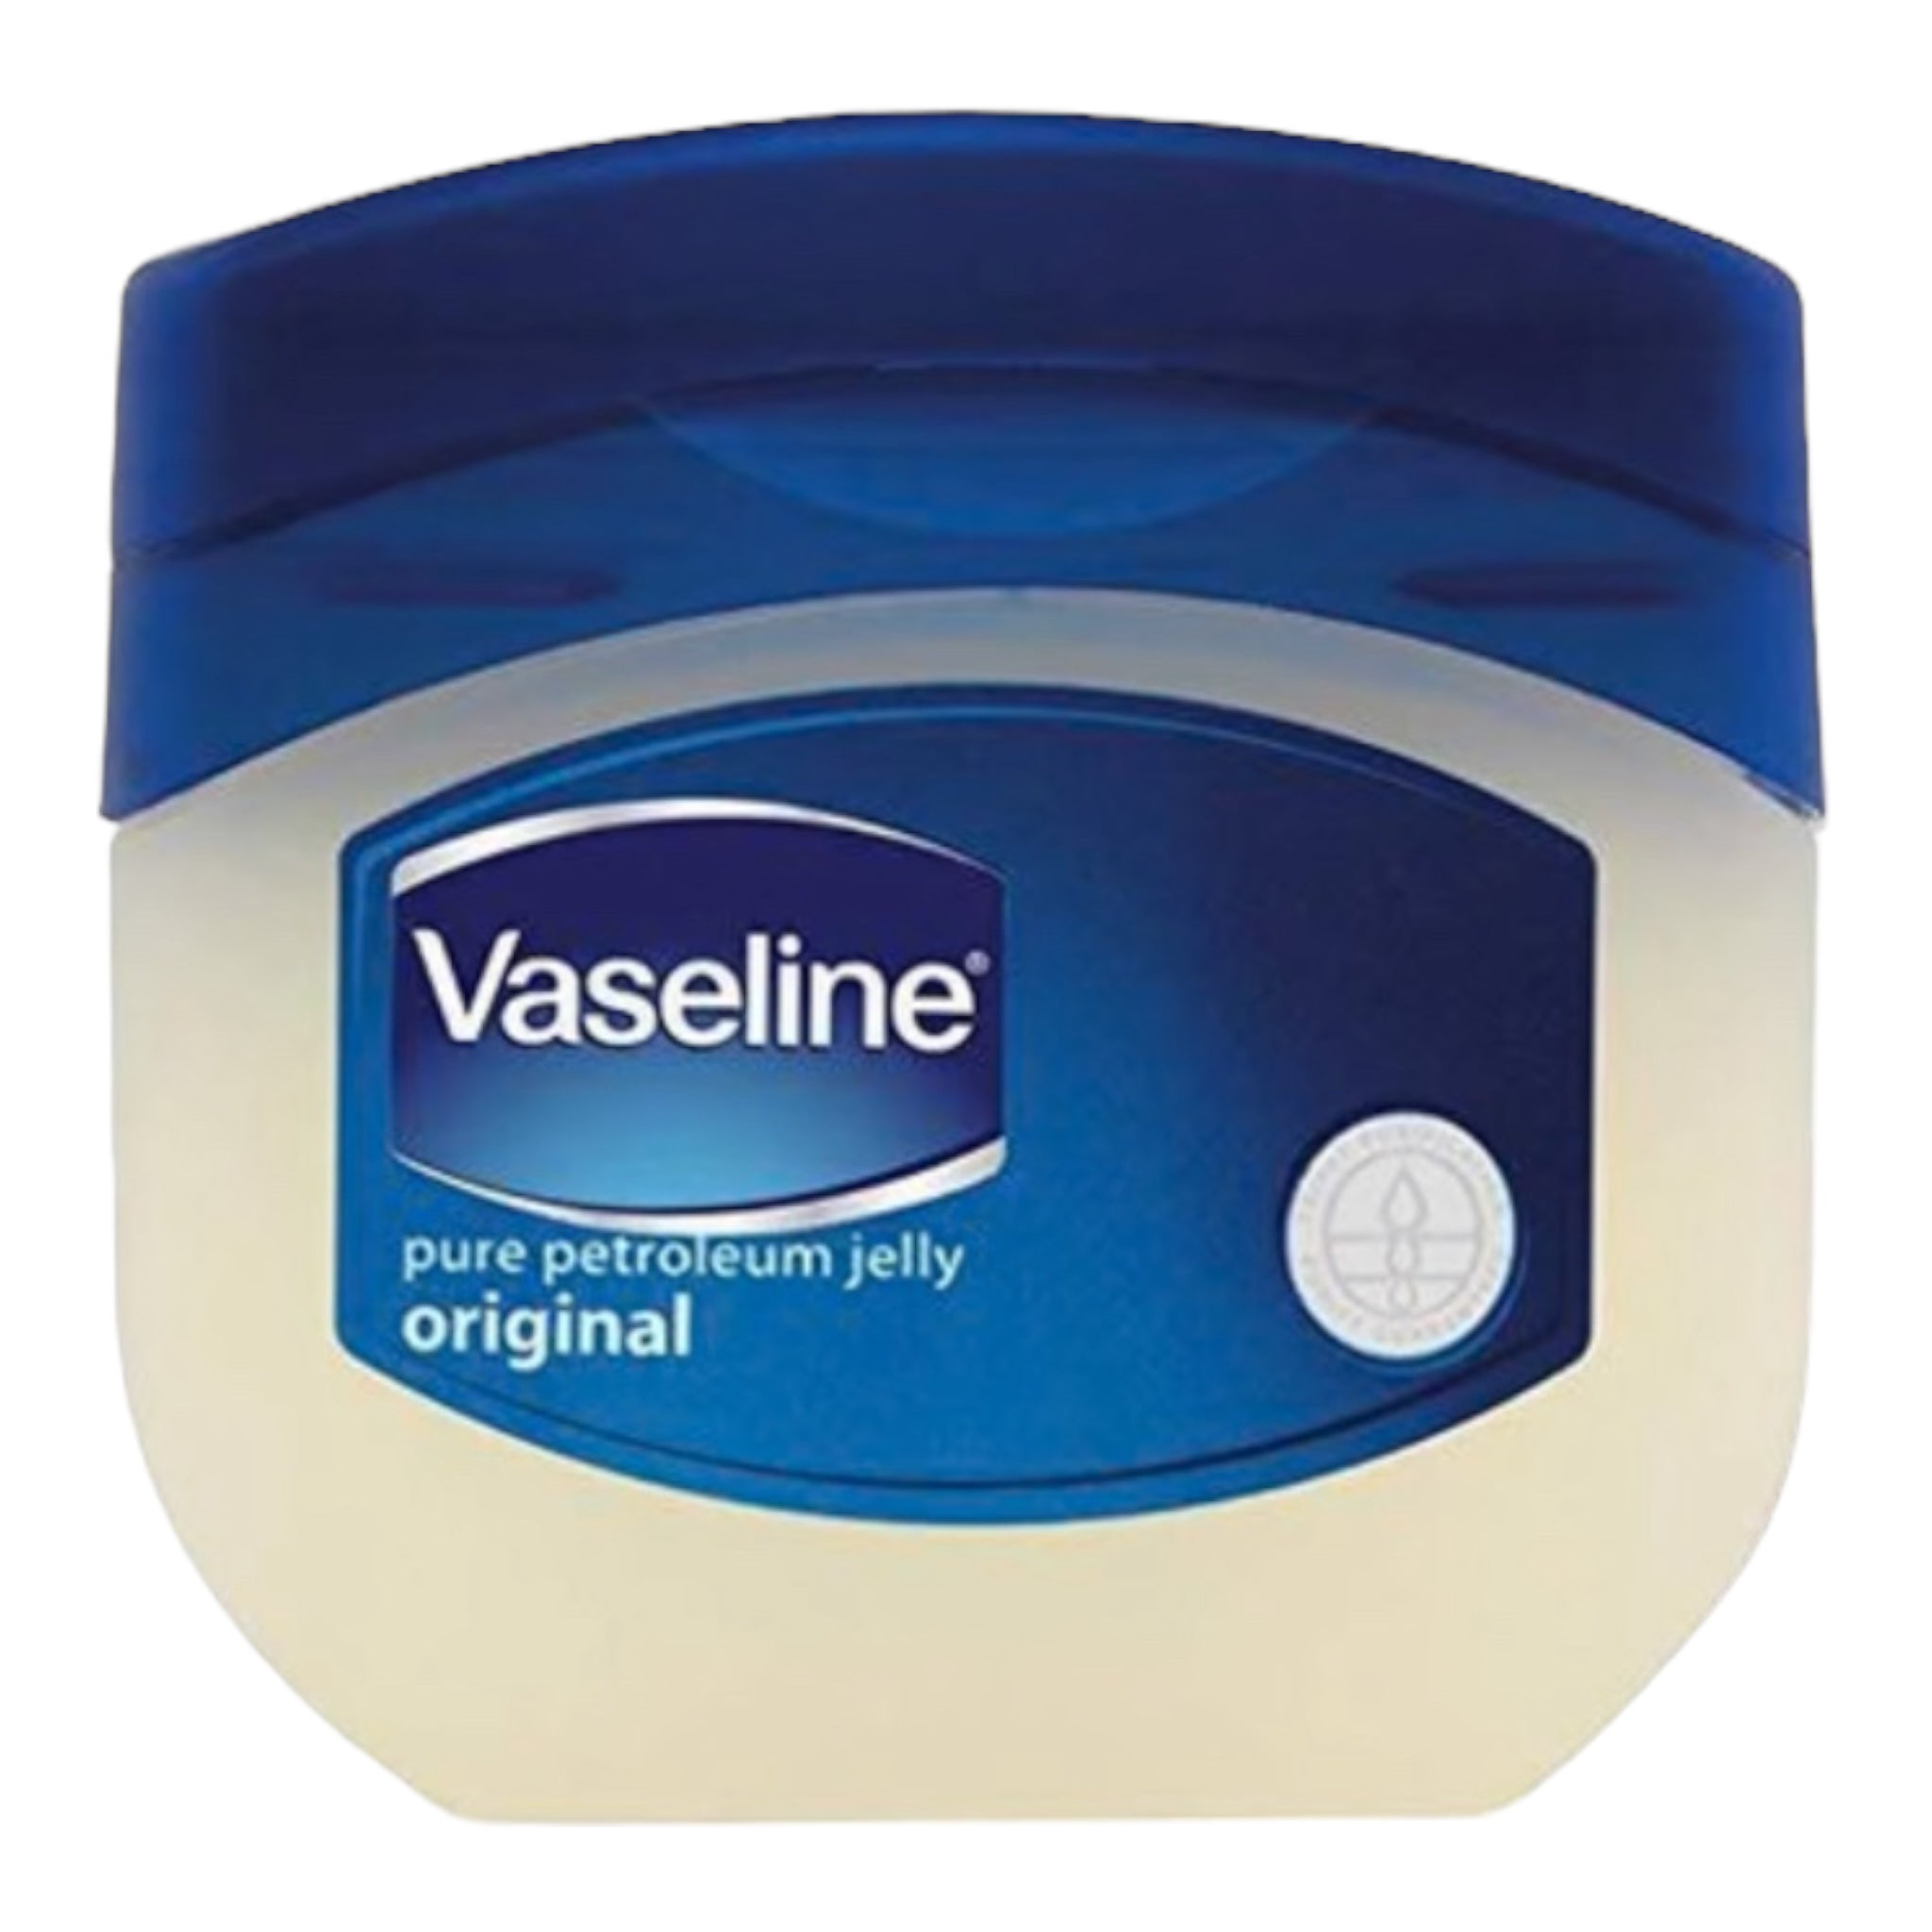 Vaseline blanche